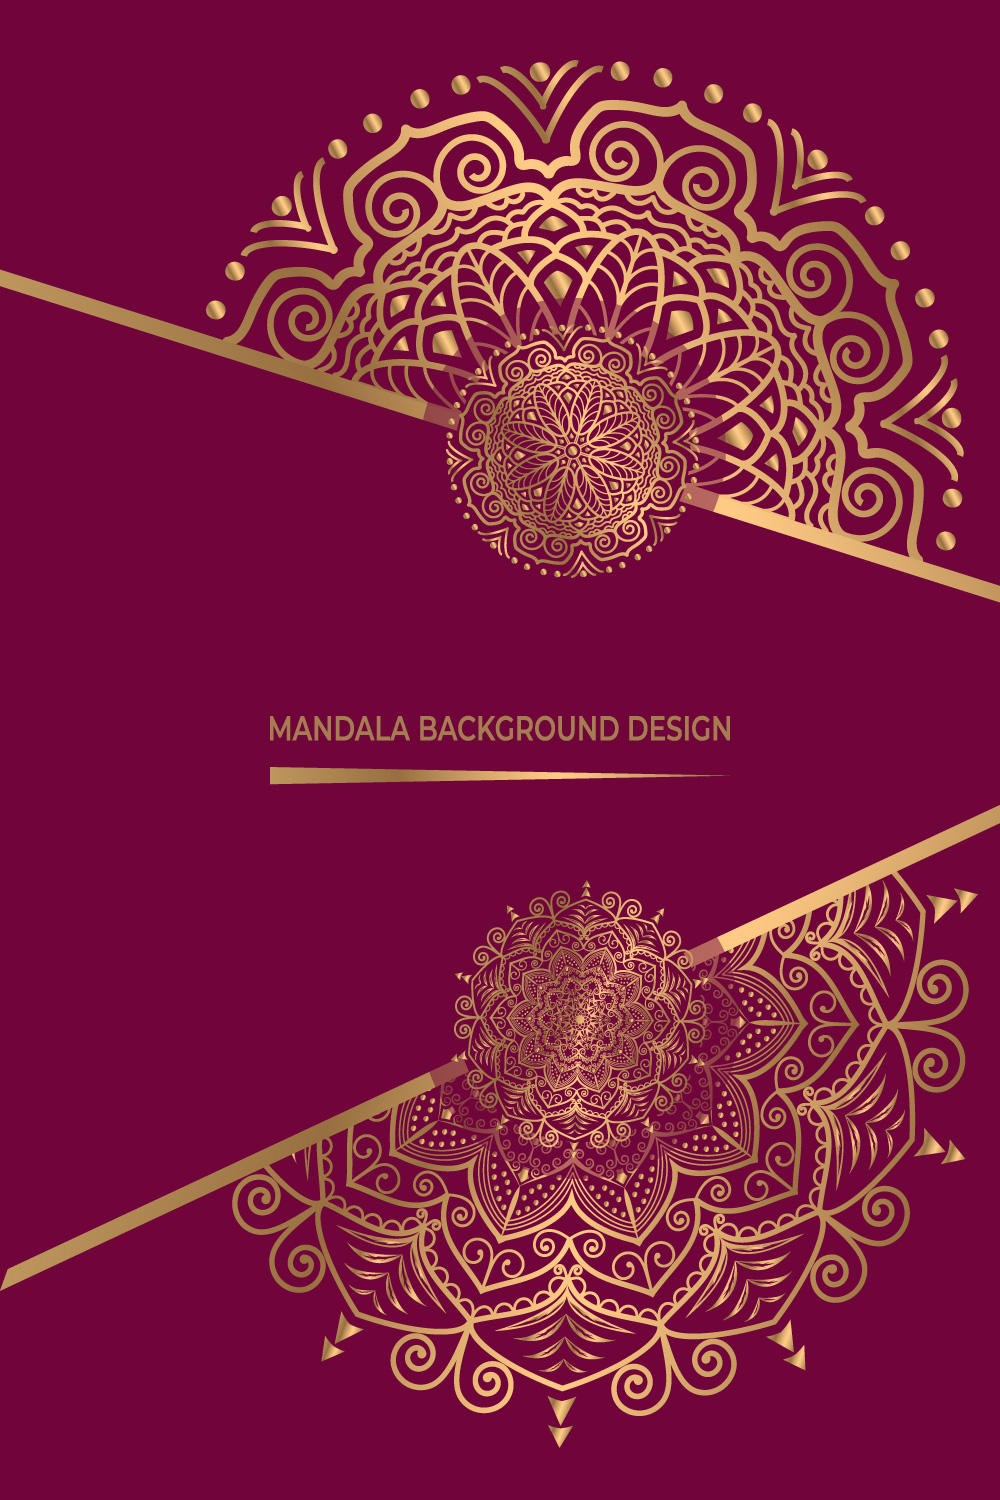 02, Mandala background design pinterest preview image.